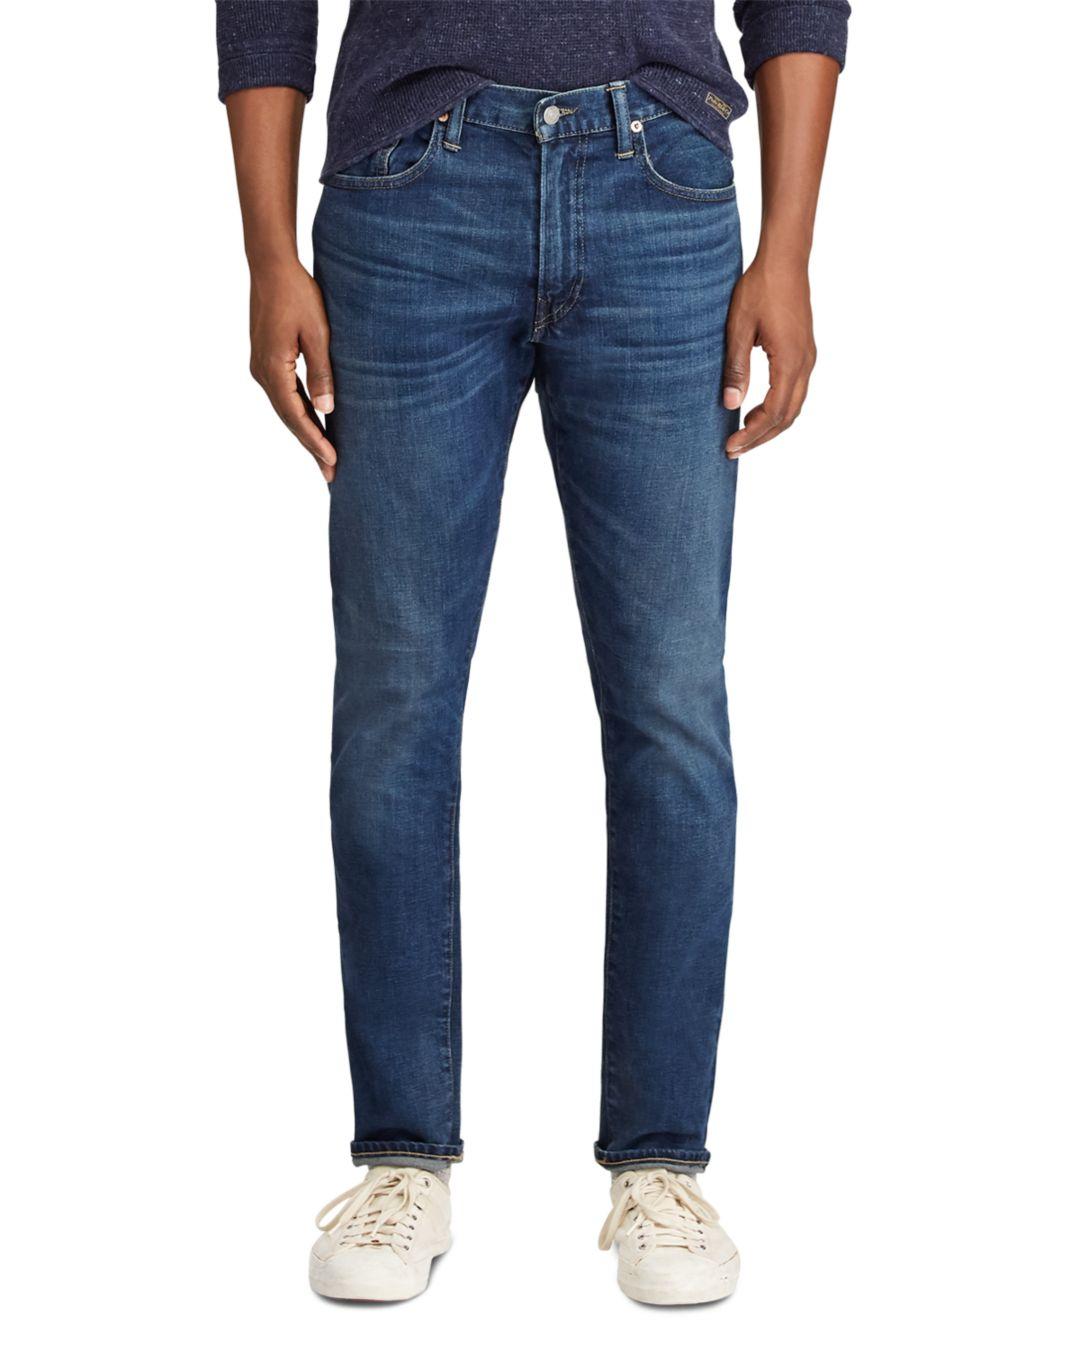 Lyst - Polo Ralph Lauren Sullivan Slim Fit Jeans In Rockford in Blue ...